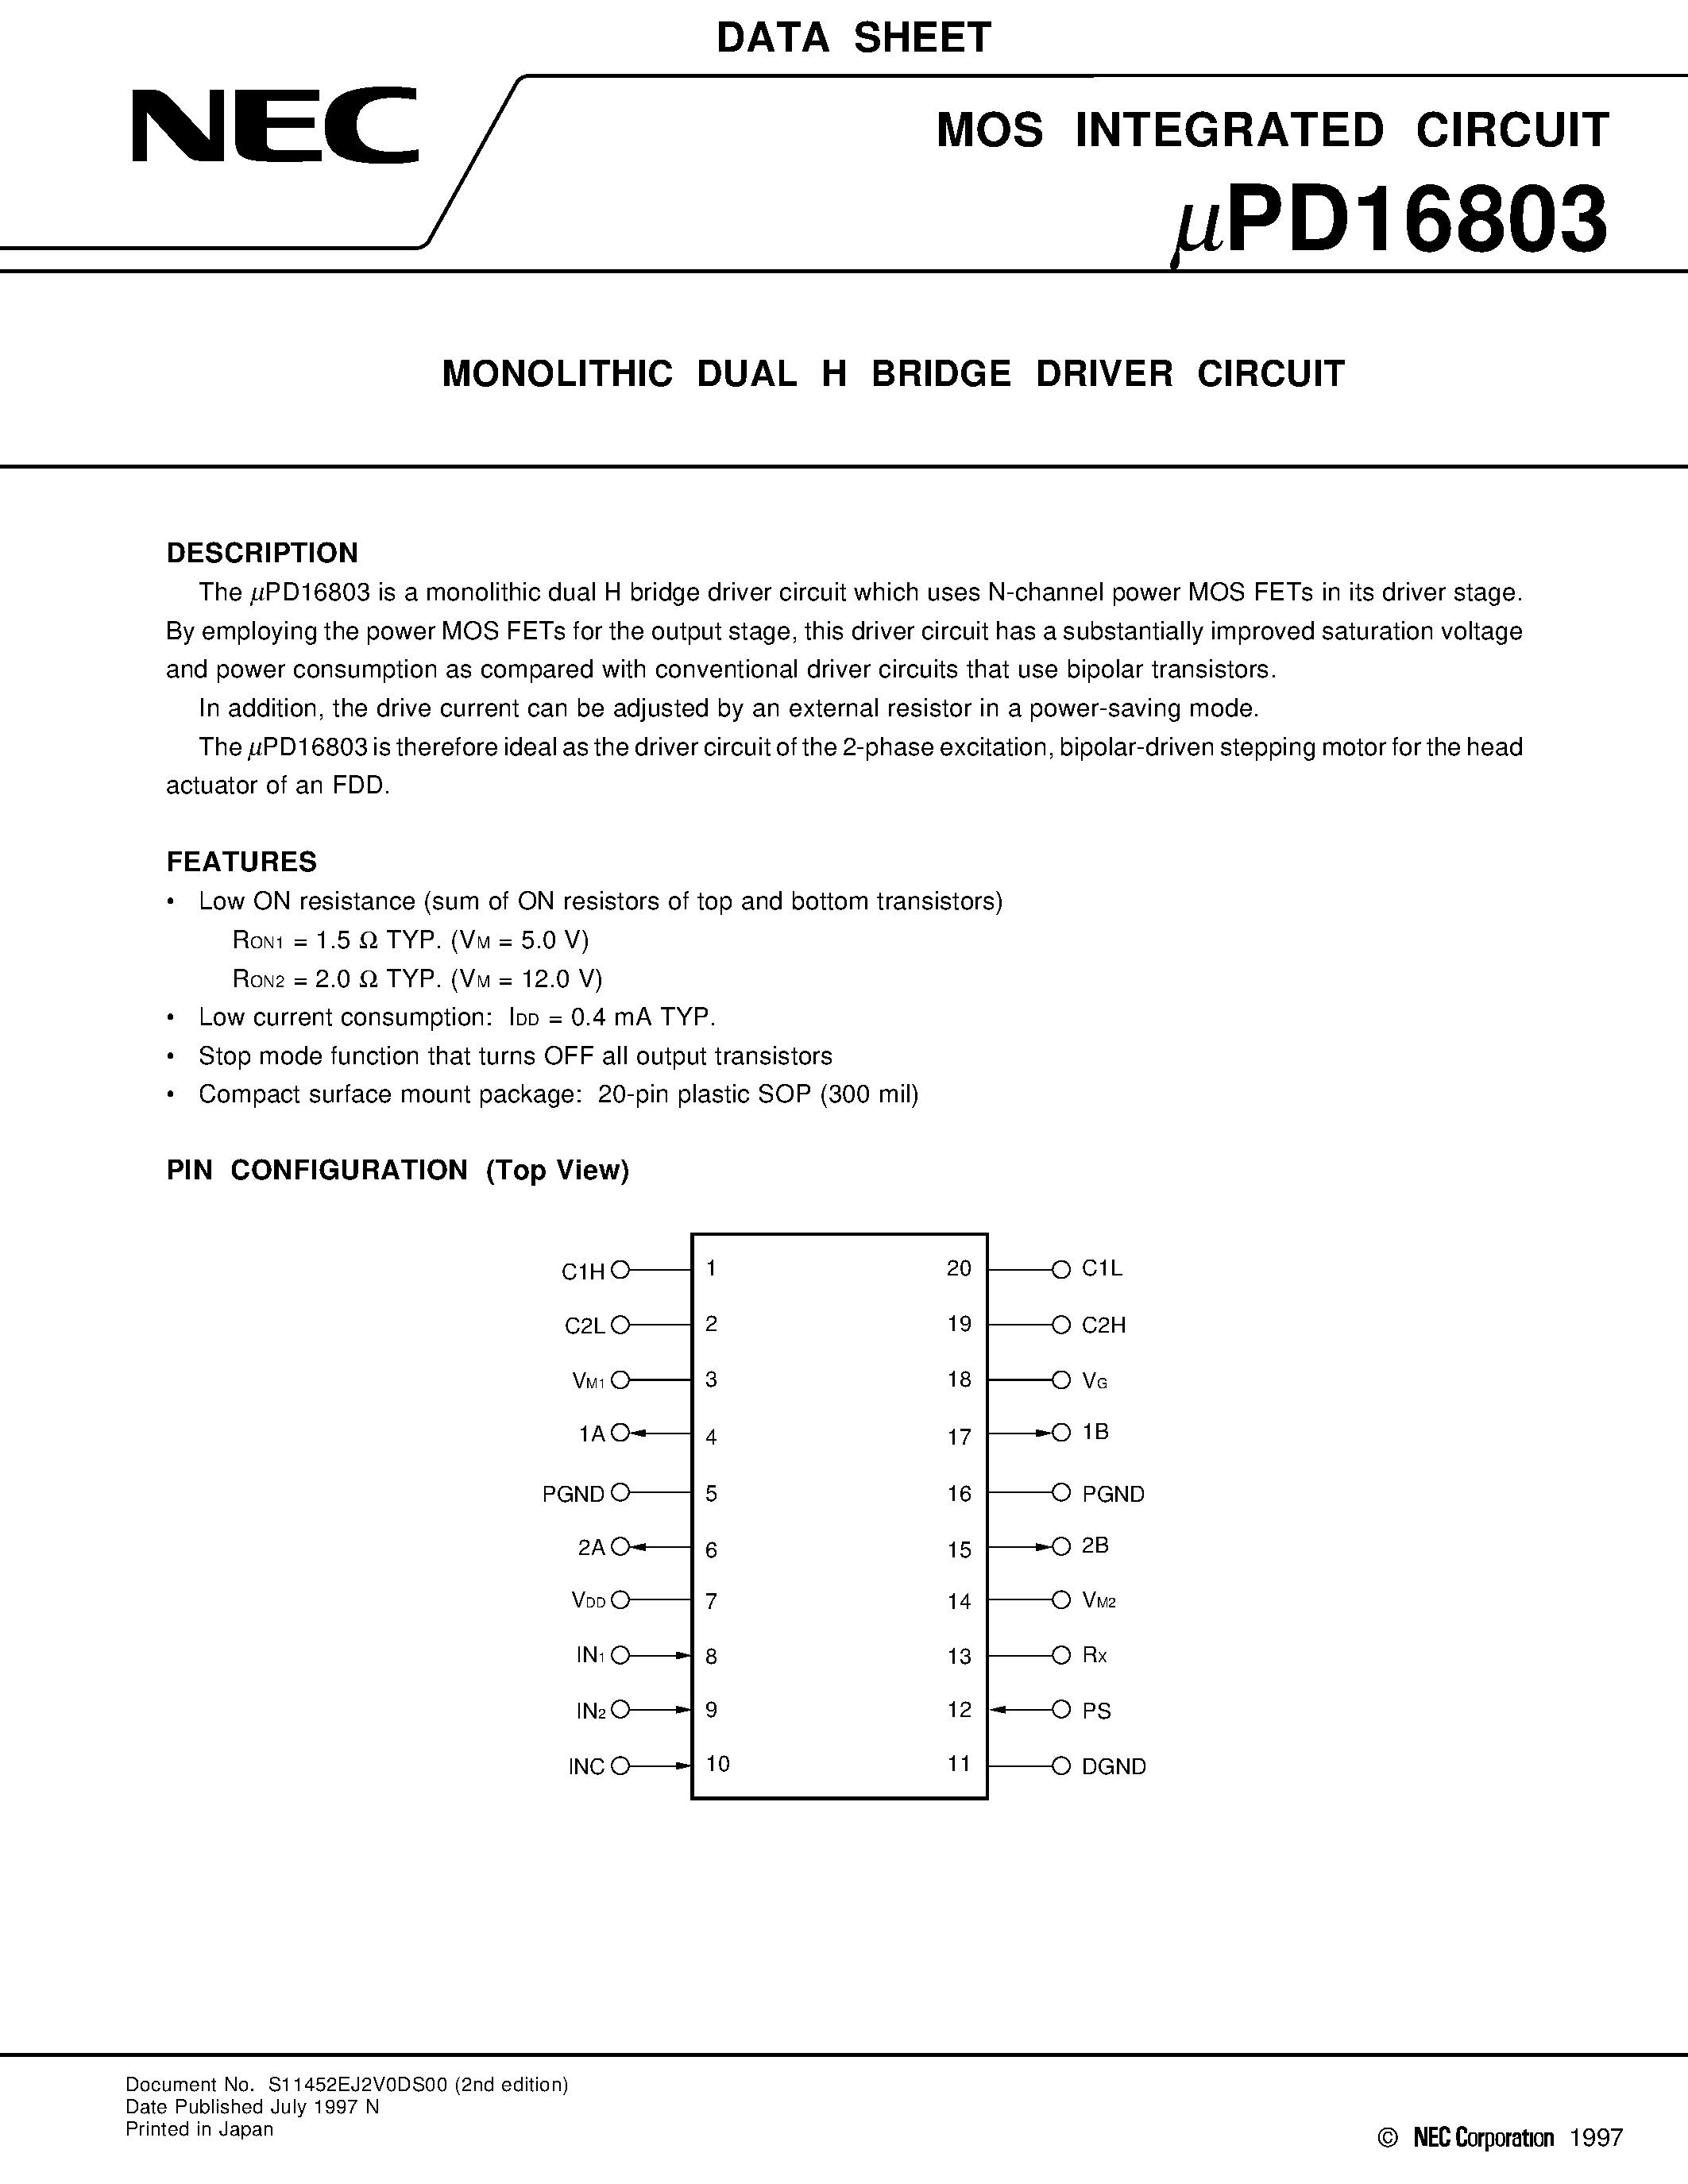 Datasheet UPD16803 - MONOLITHIC DUAL H BRIDGE DRIVER CIRCUIT page 1